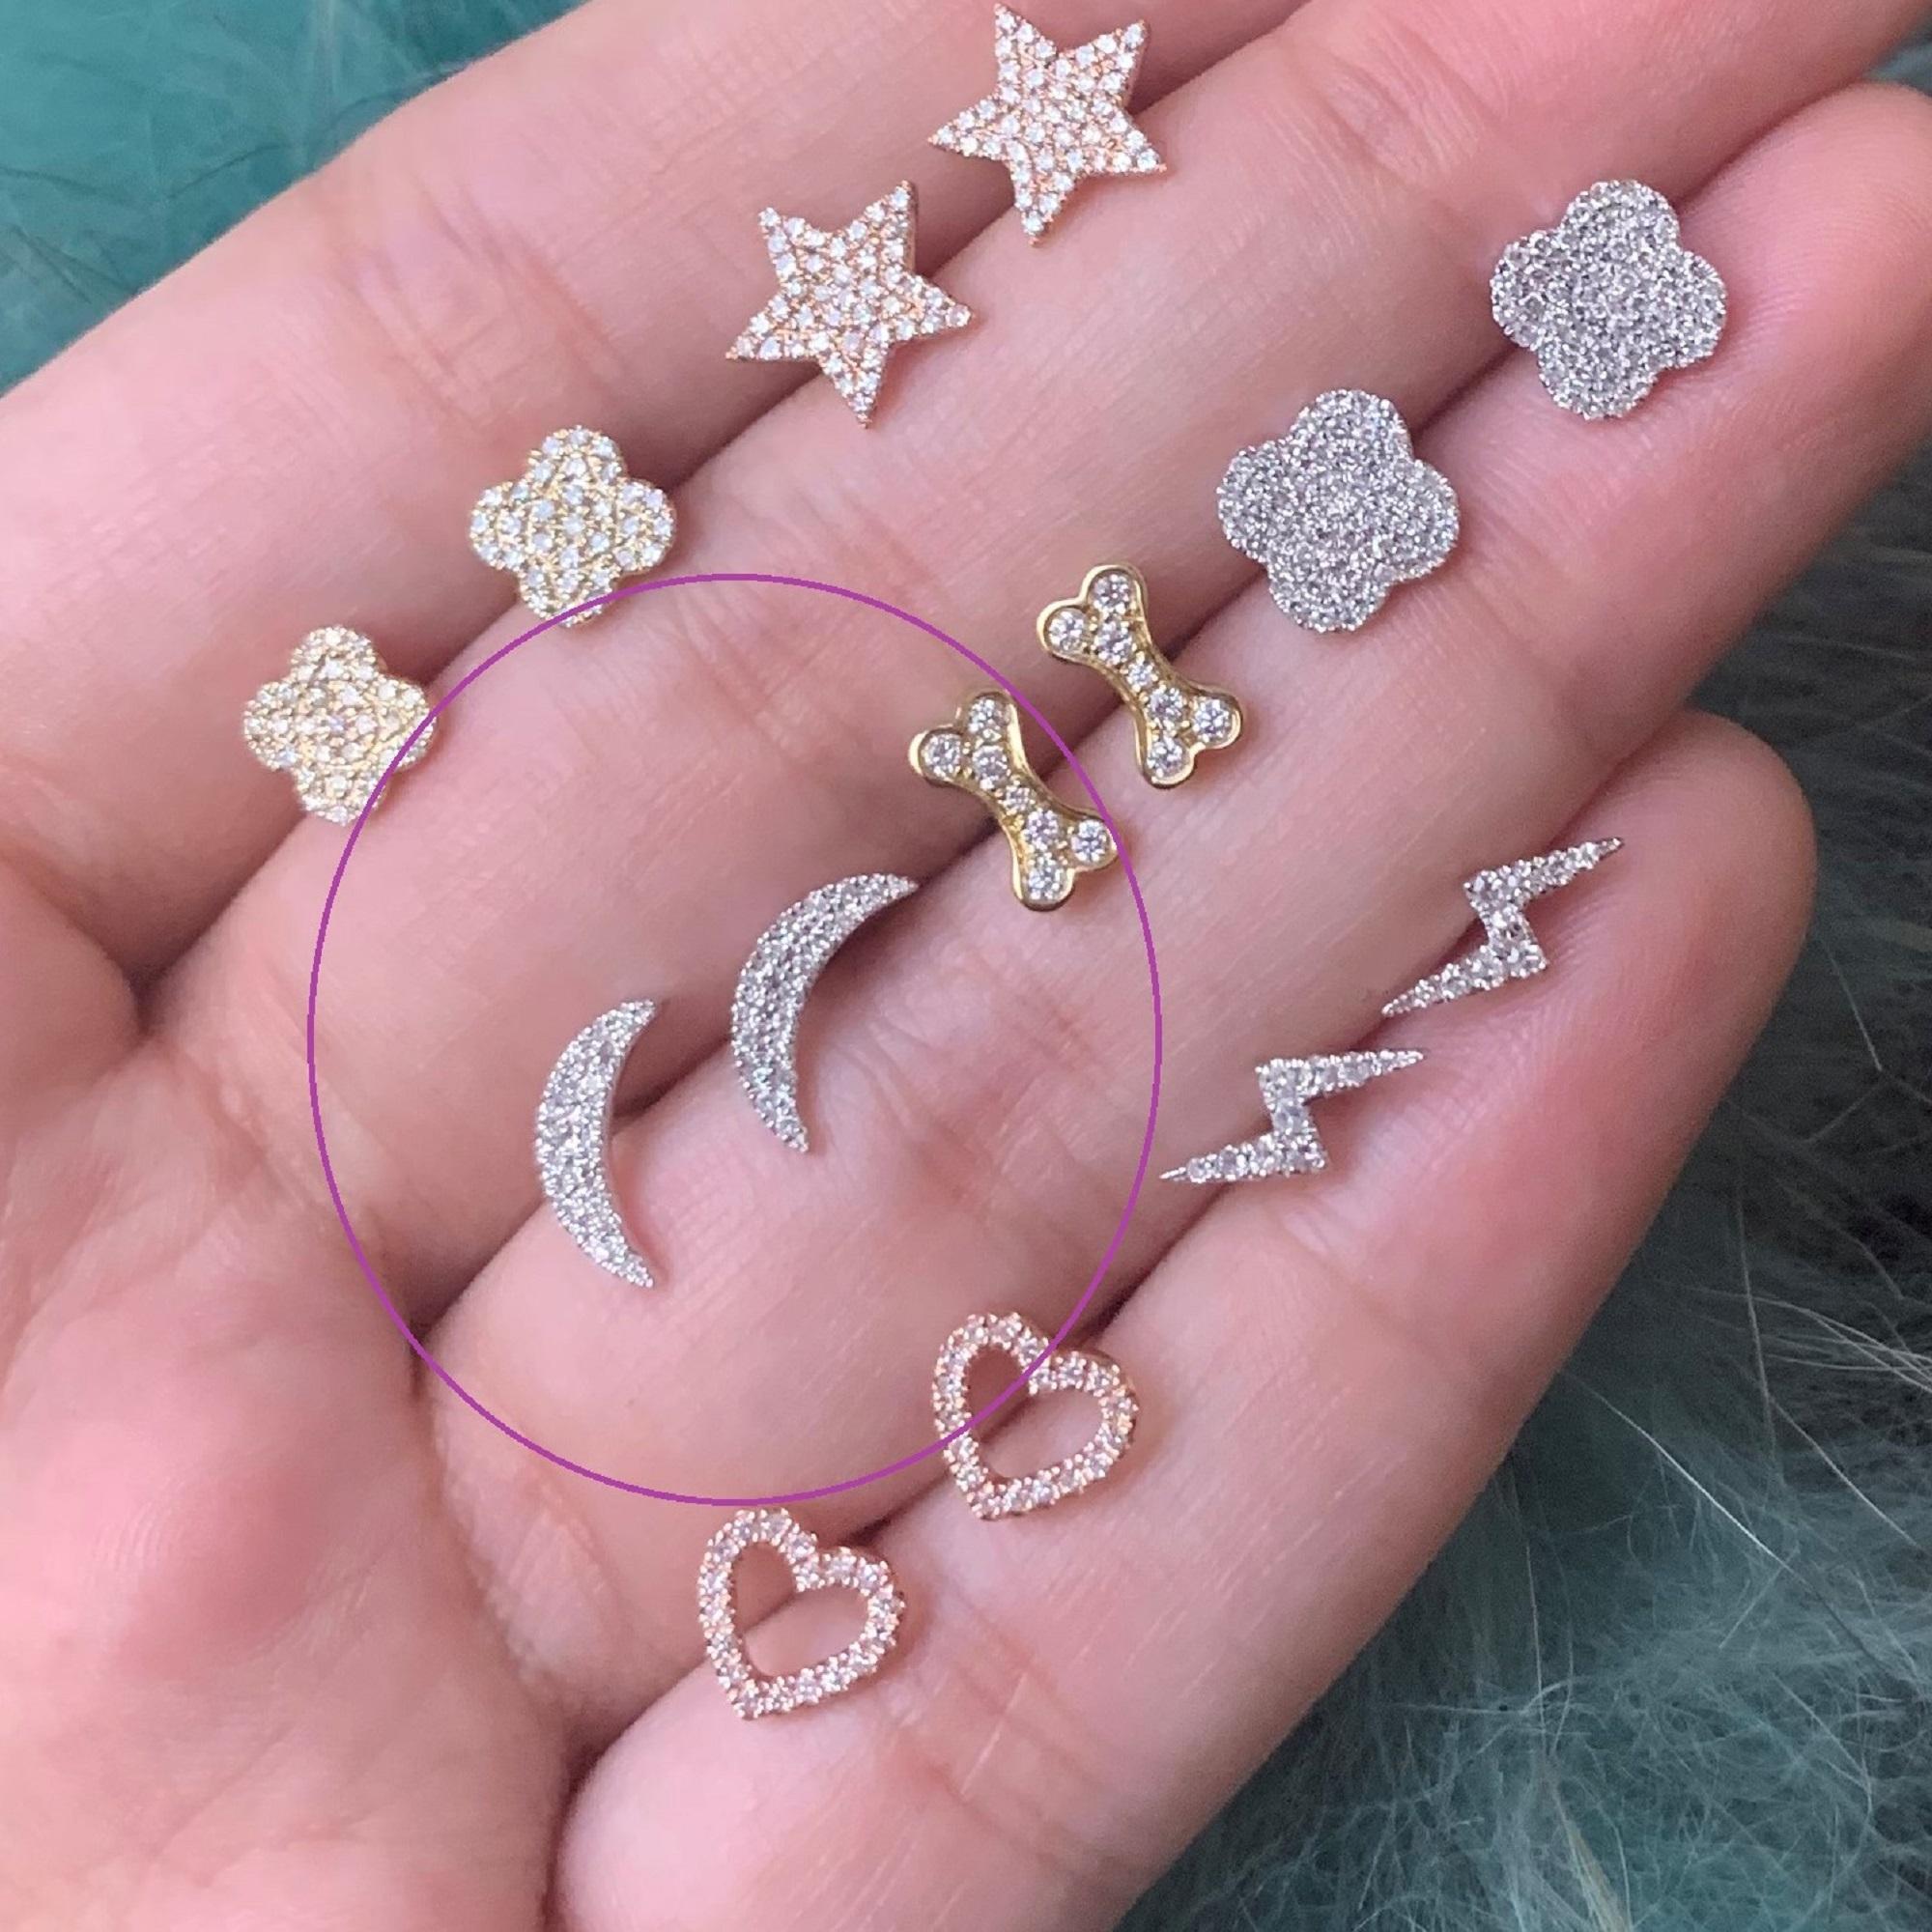 14 carat white gold diamond earrings